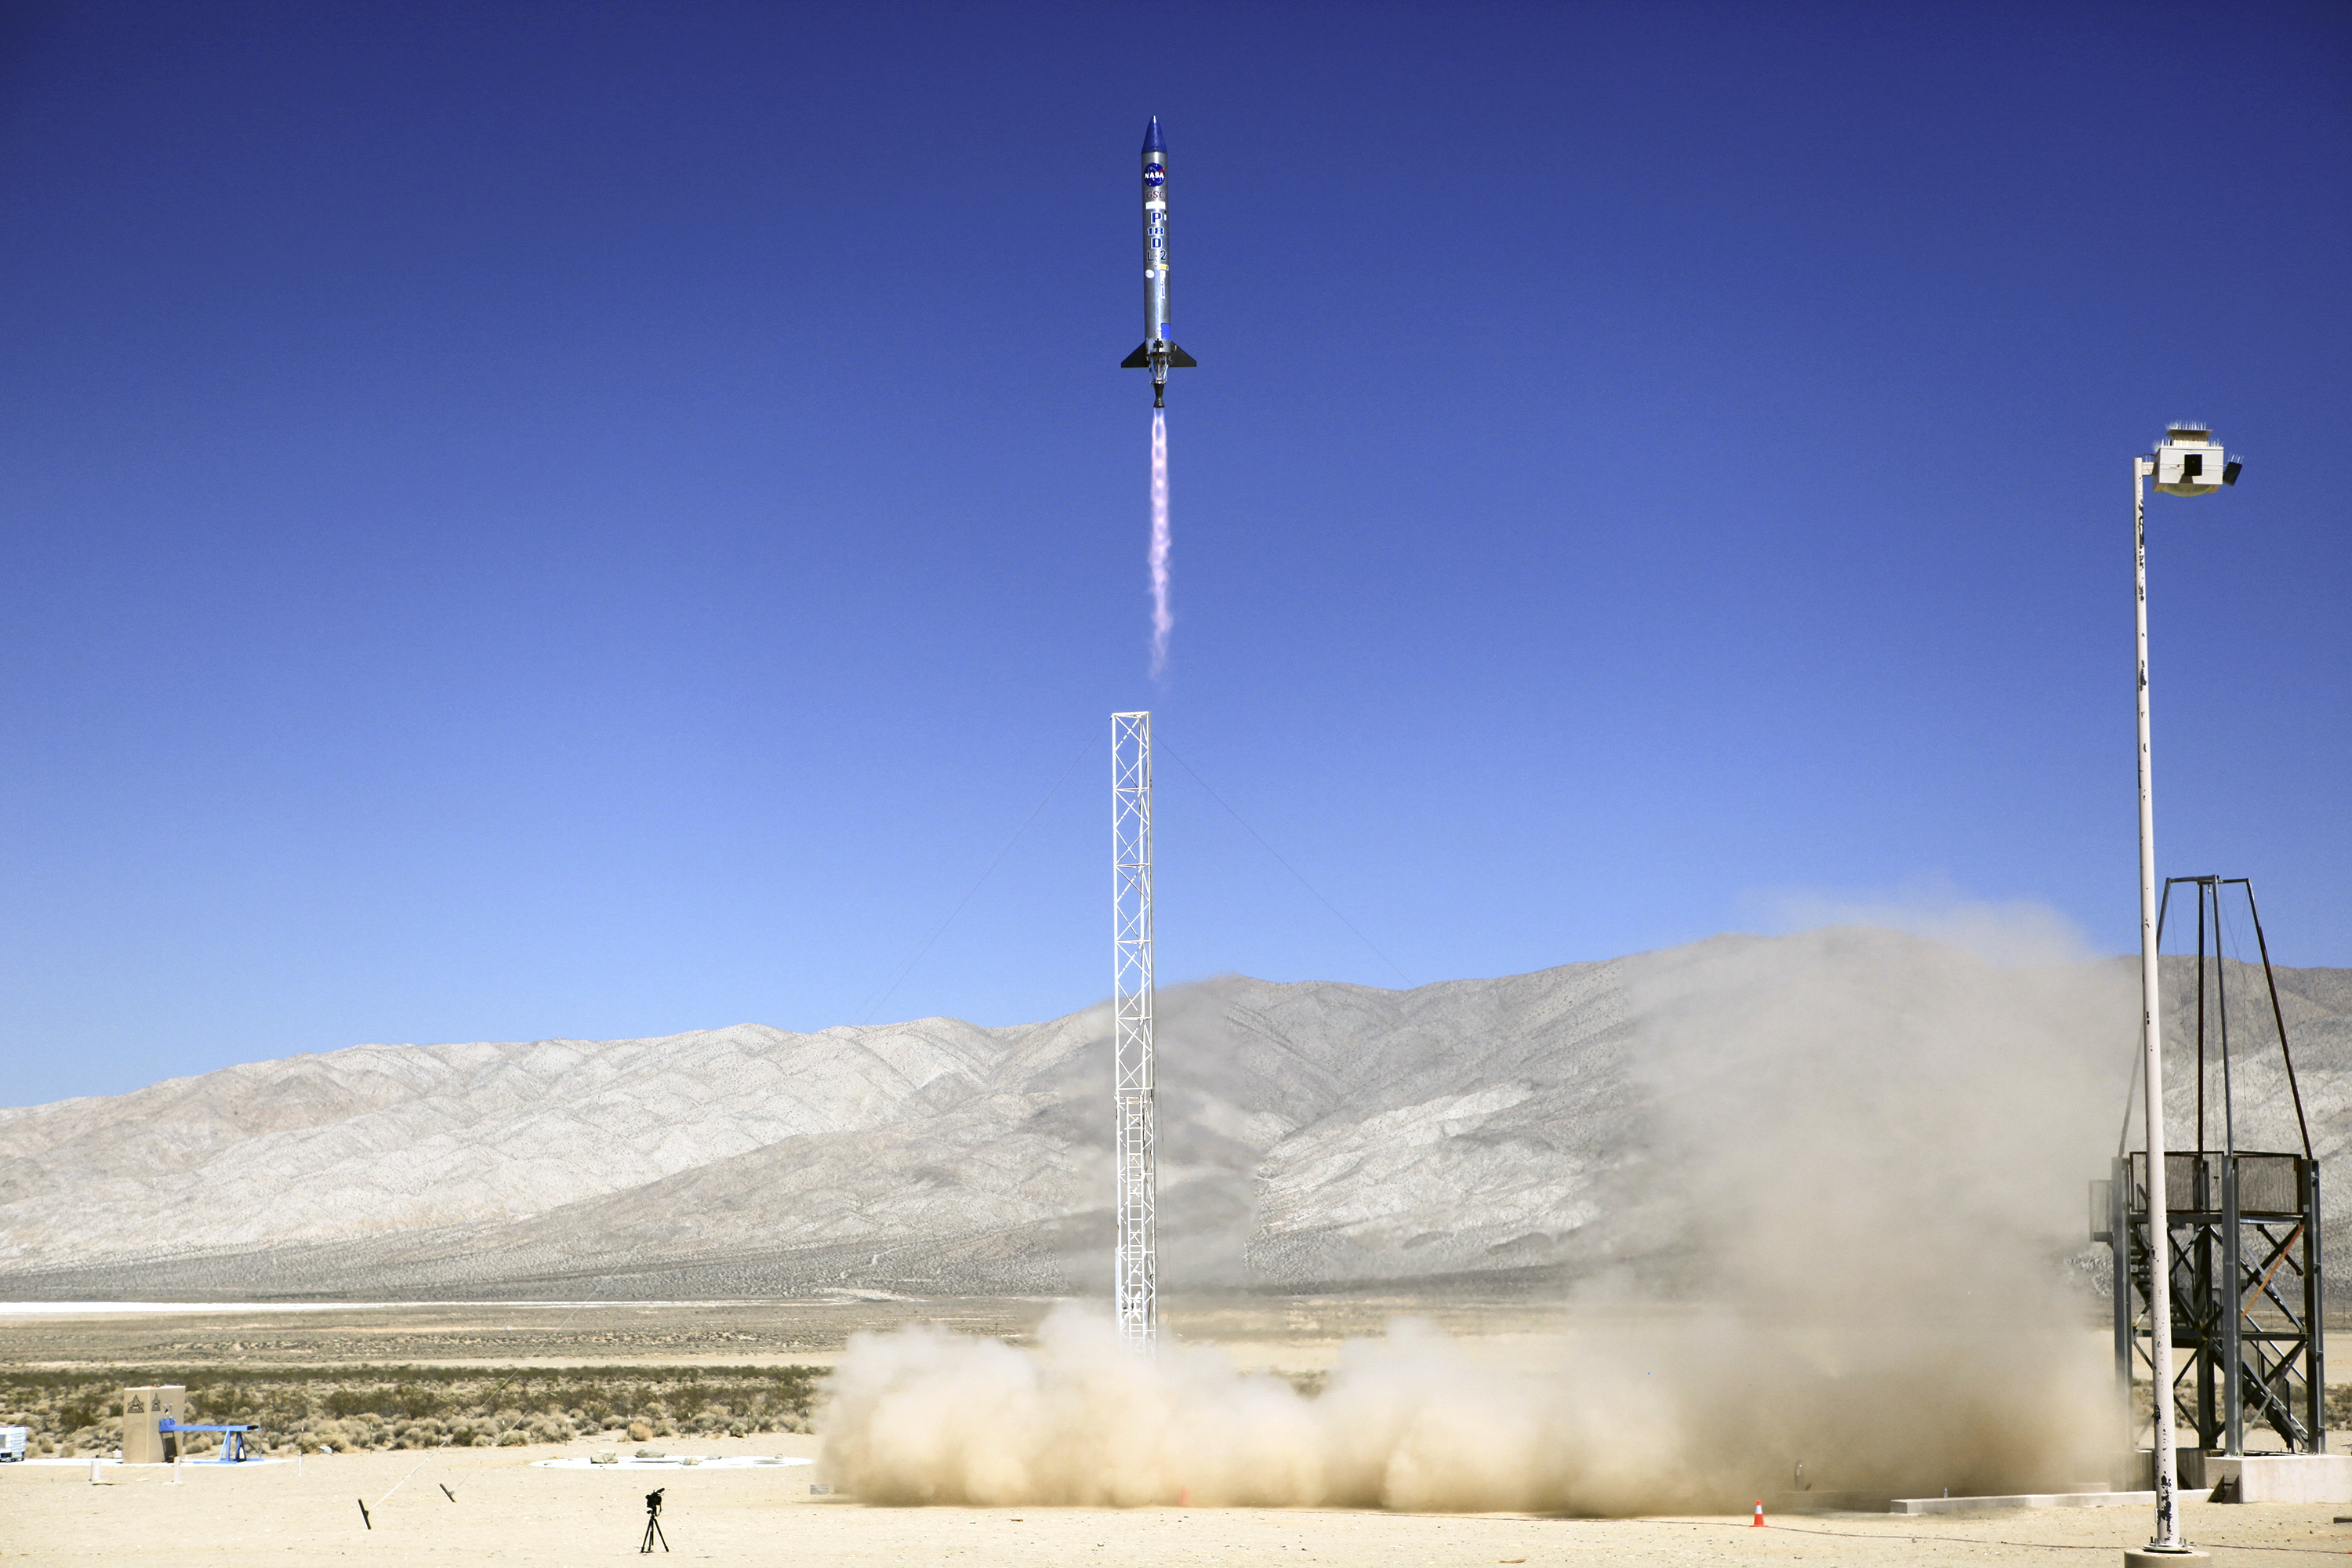 Small satellites soar in high-altitude demonstration